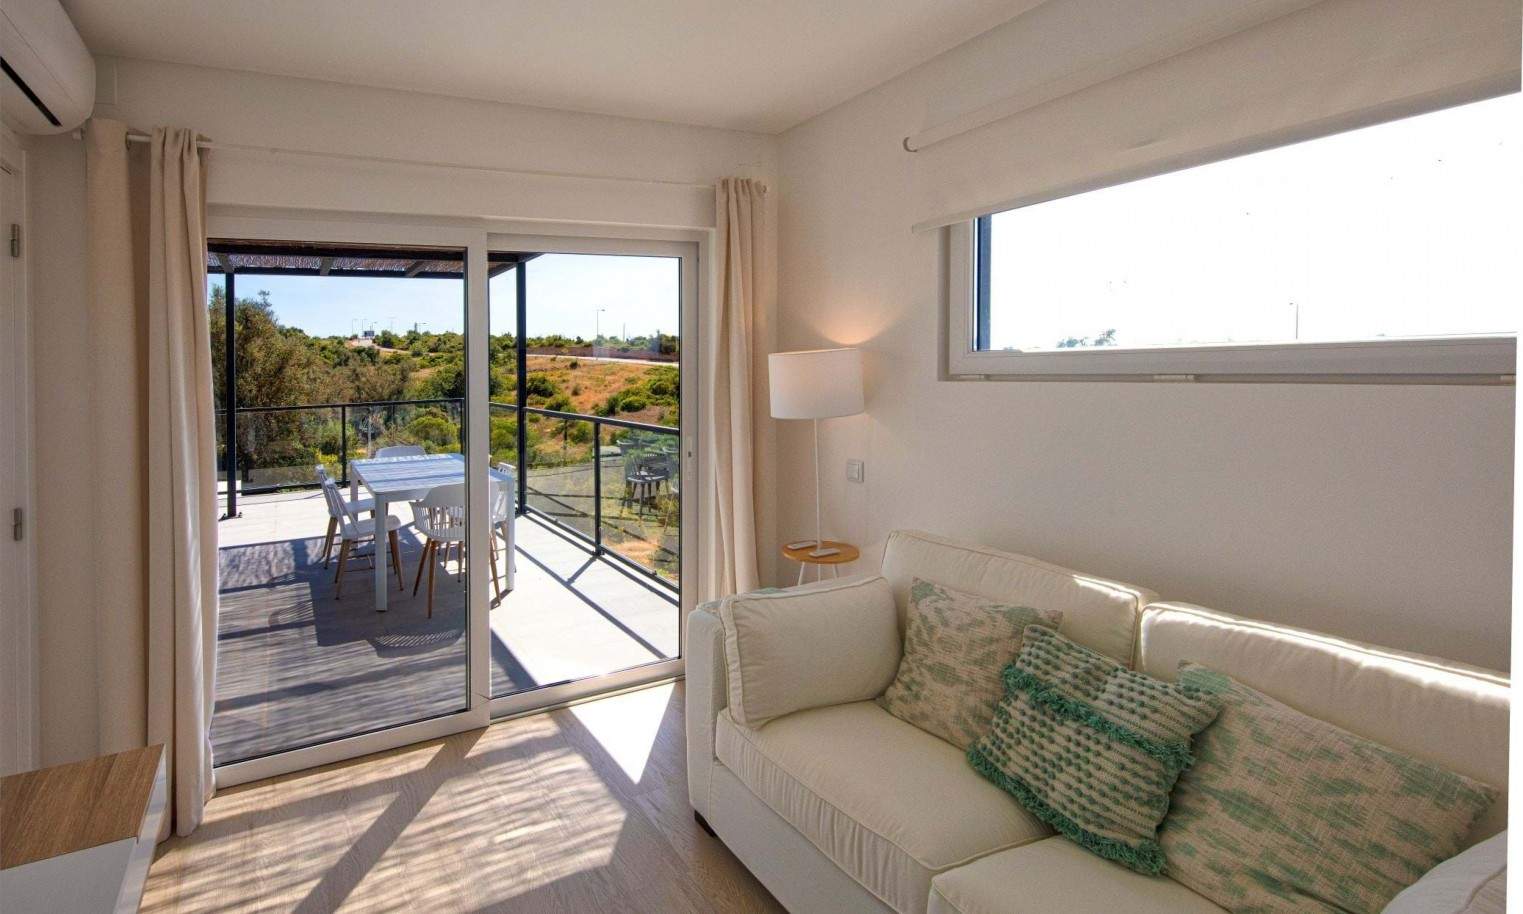 2+1 bedroom villa in resort, for sale in Carvoeiro, Algarve_206839